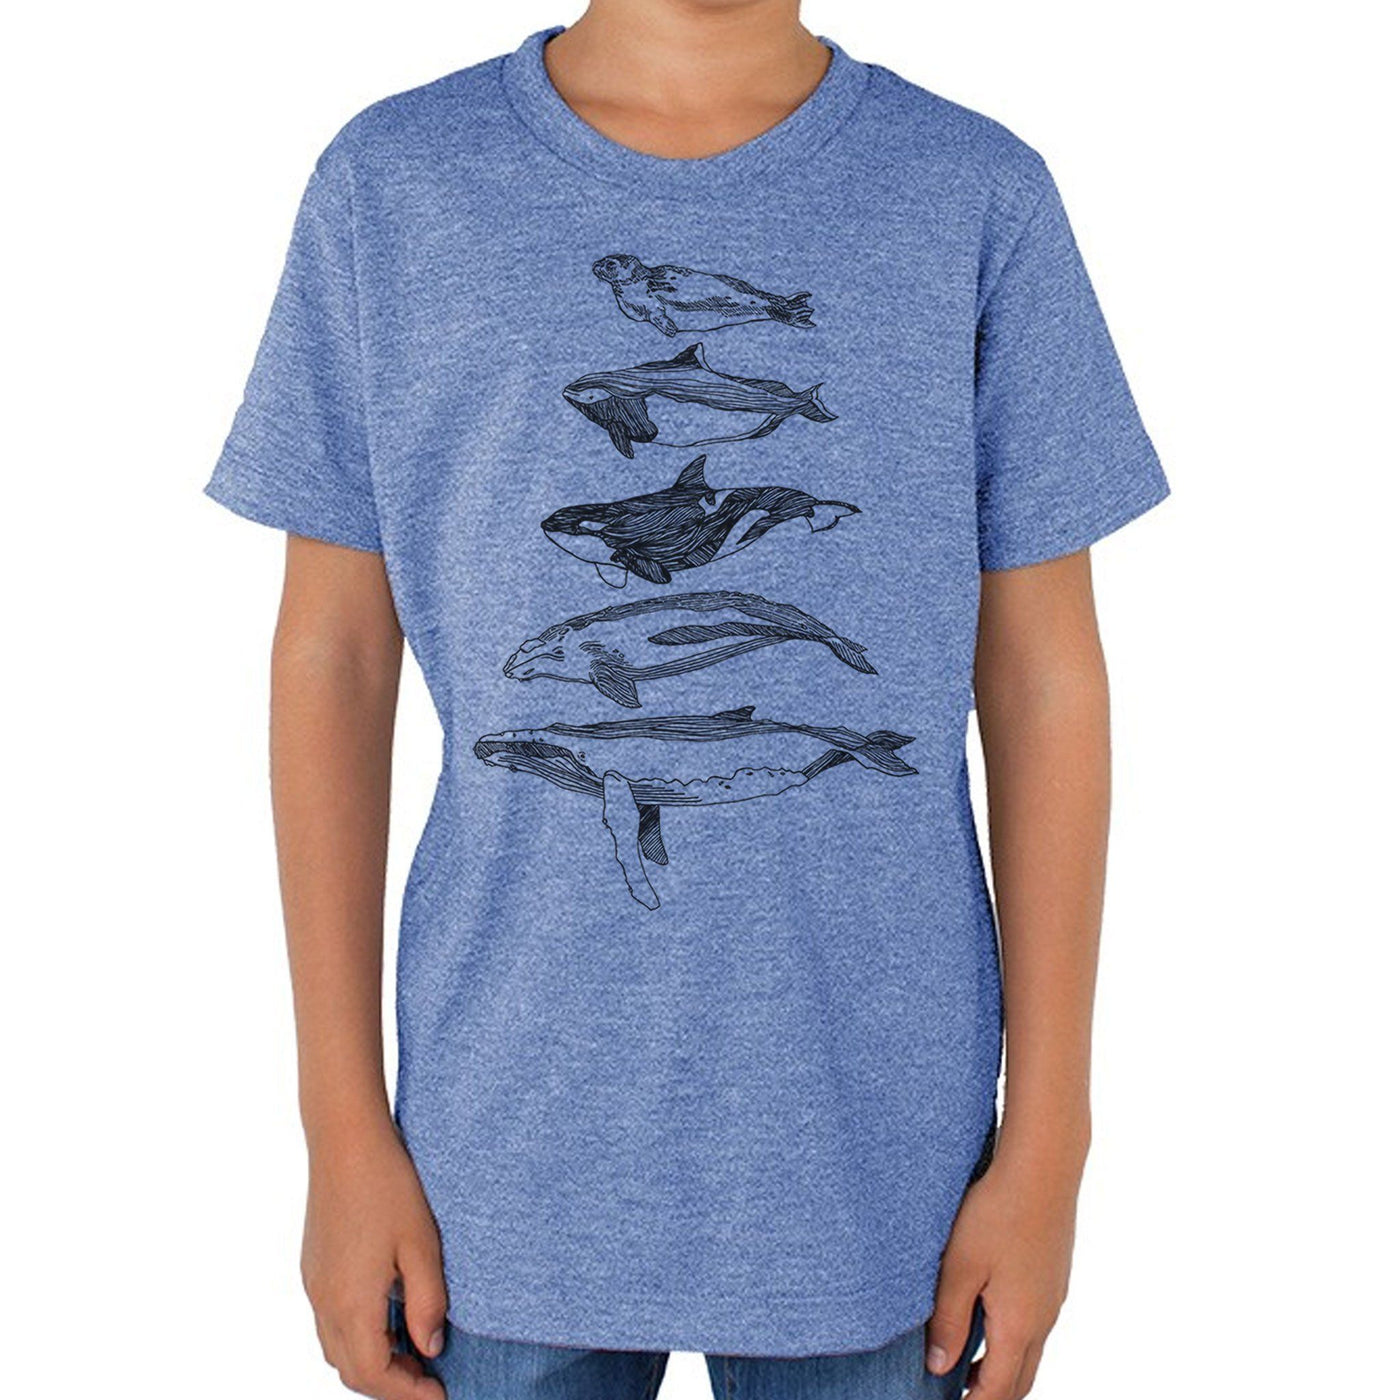 Salish Sea Mammals - Kids triblend t-shirt (Light blue) Shirt Kate